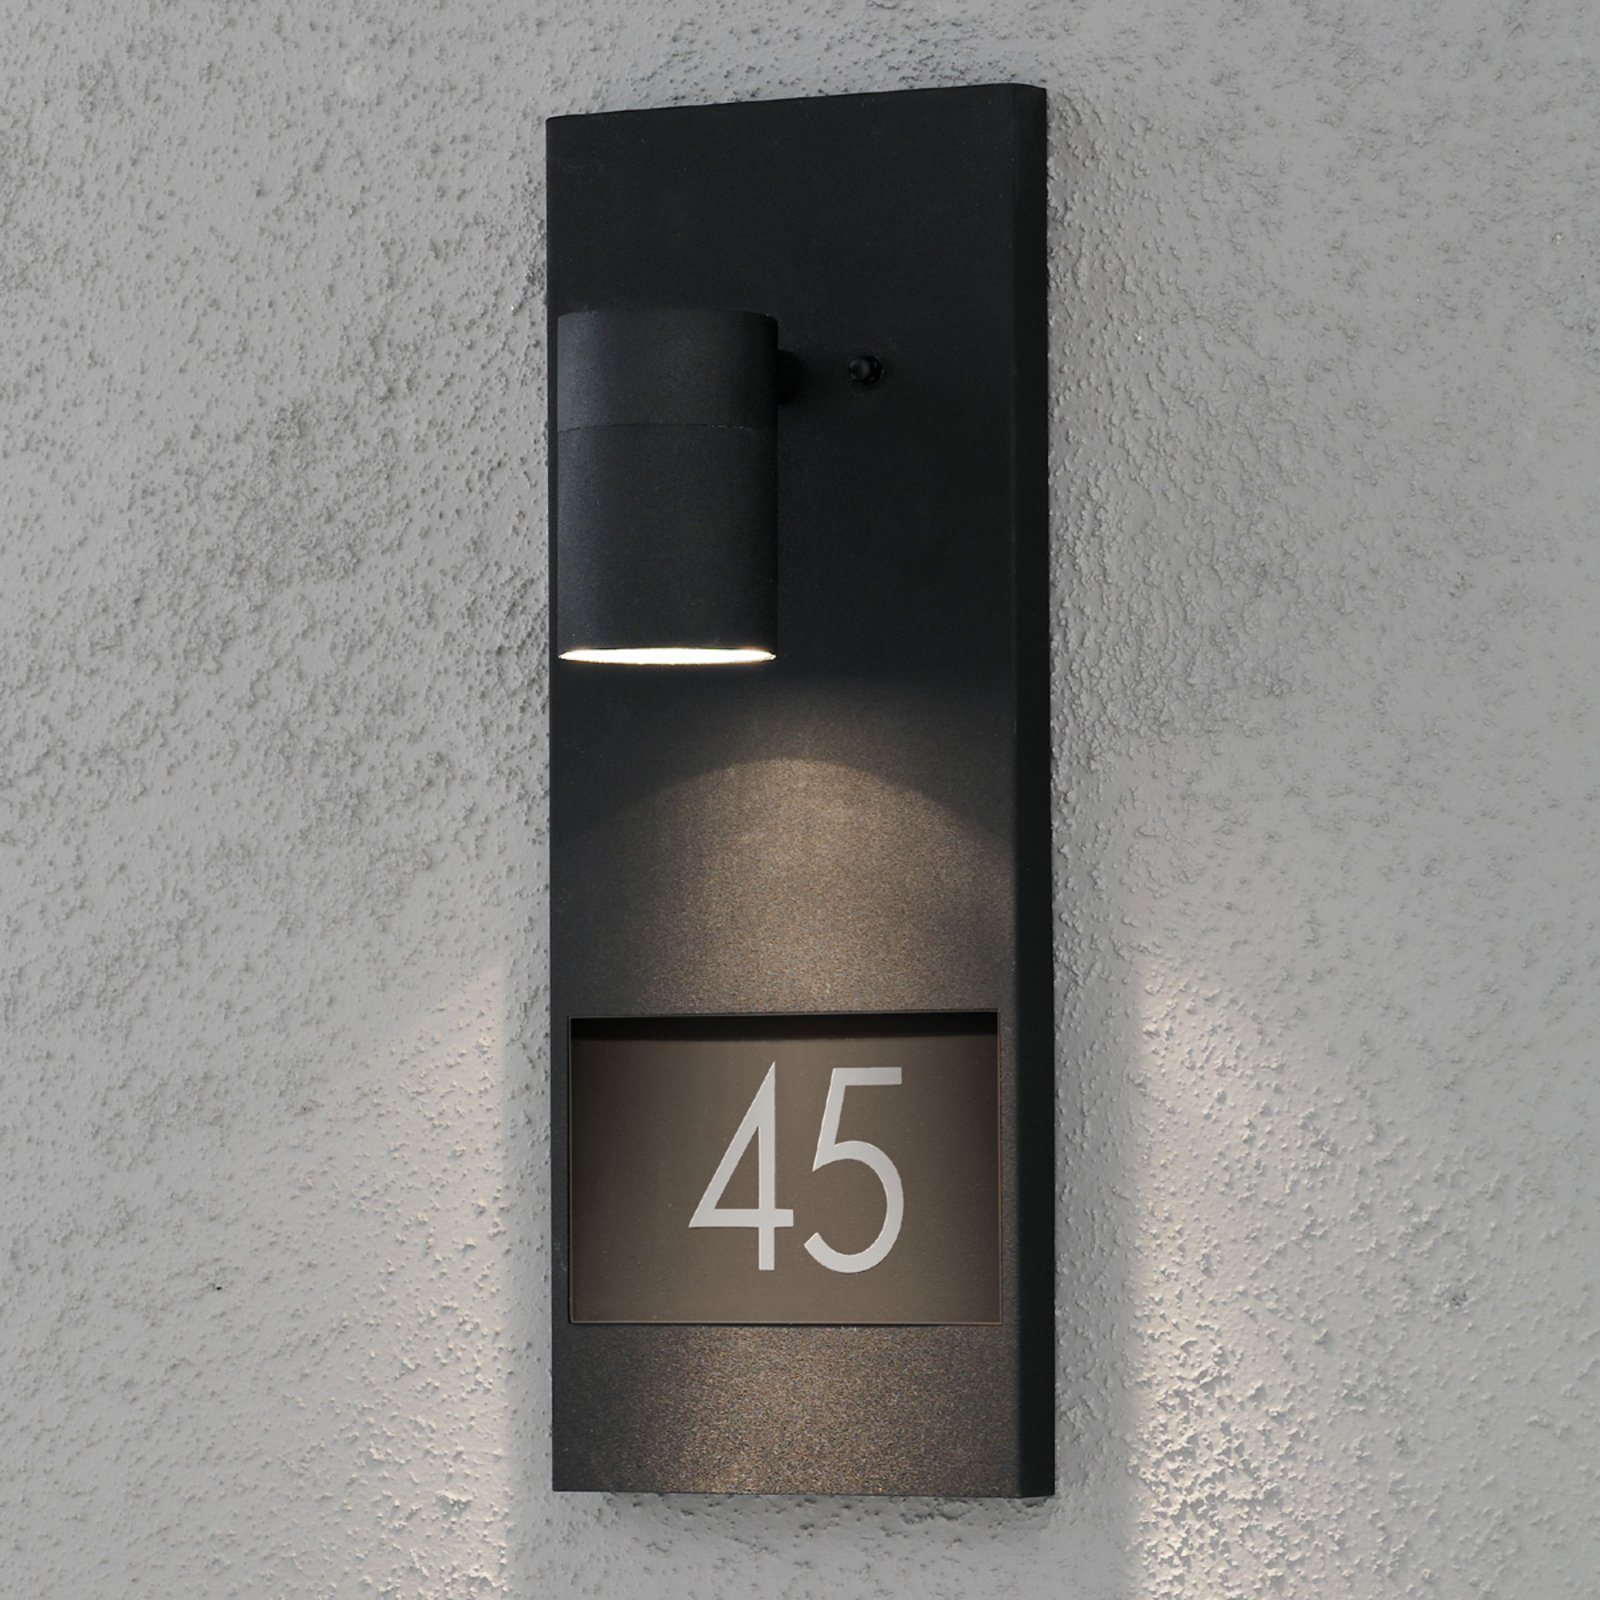 Modena 7655 house number light, black